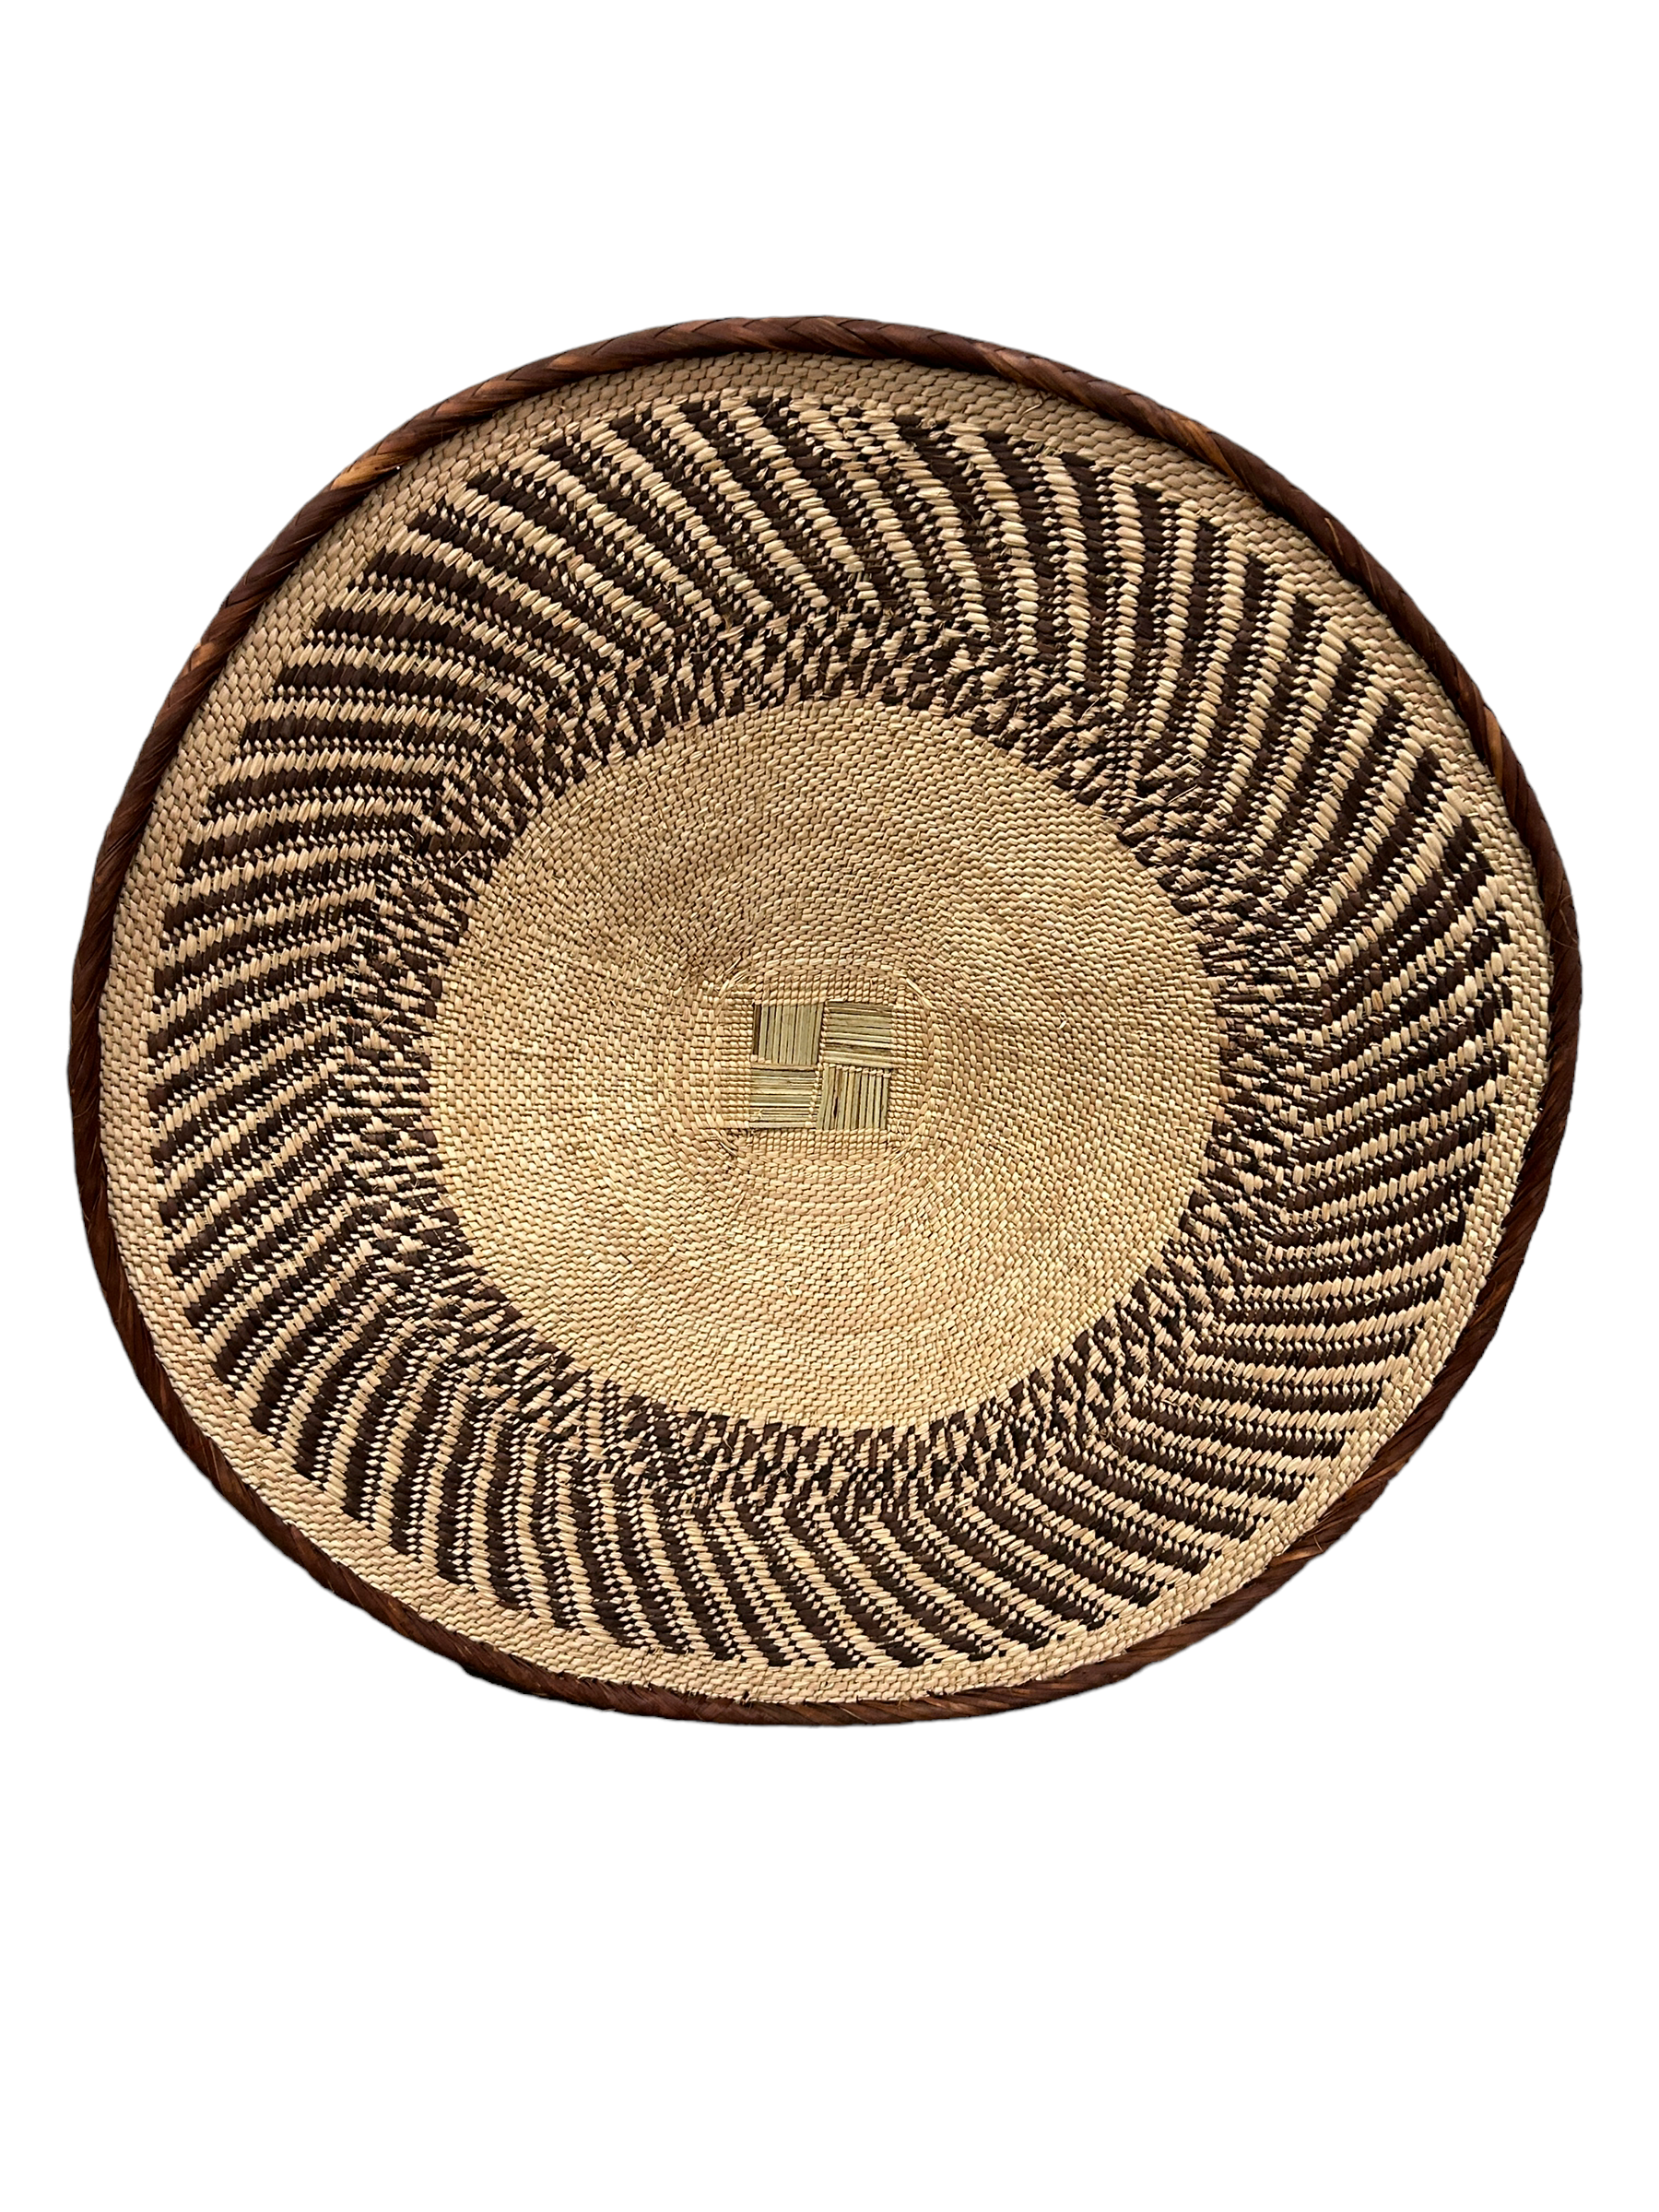 botanicalboysuk Tonga Basket Natural (70-13)